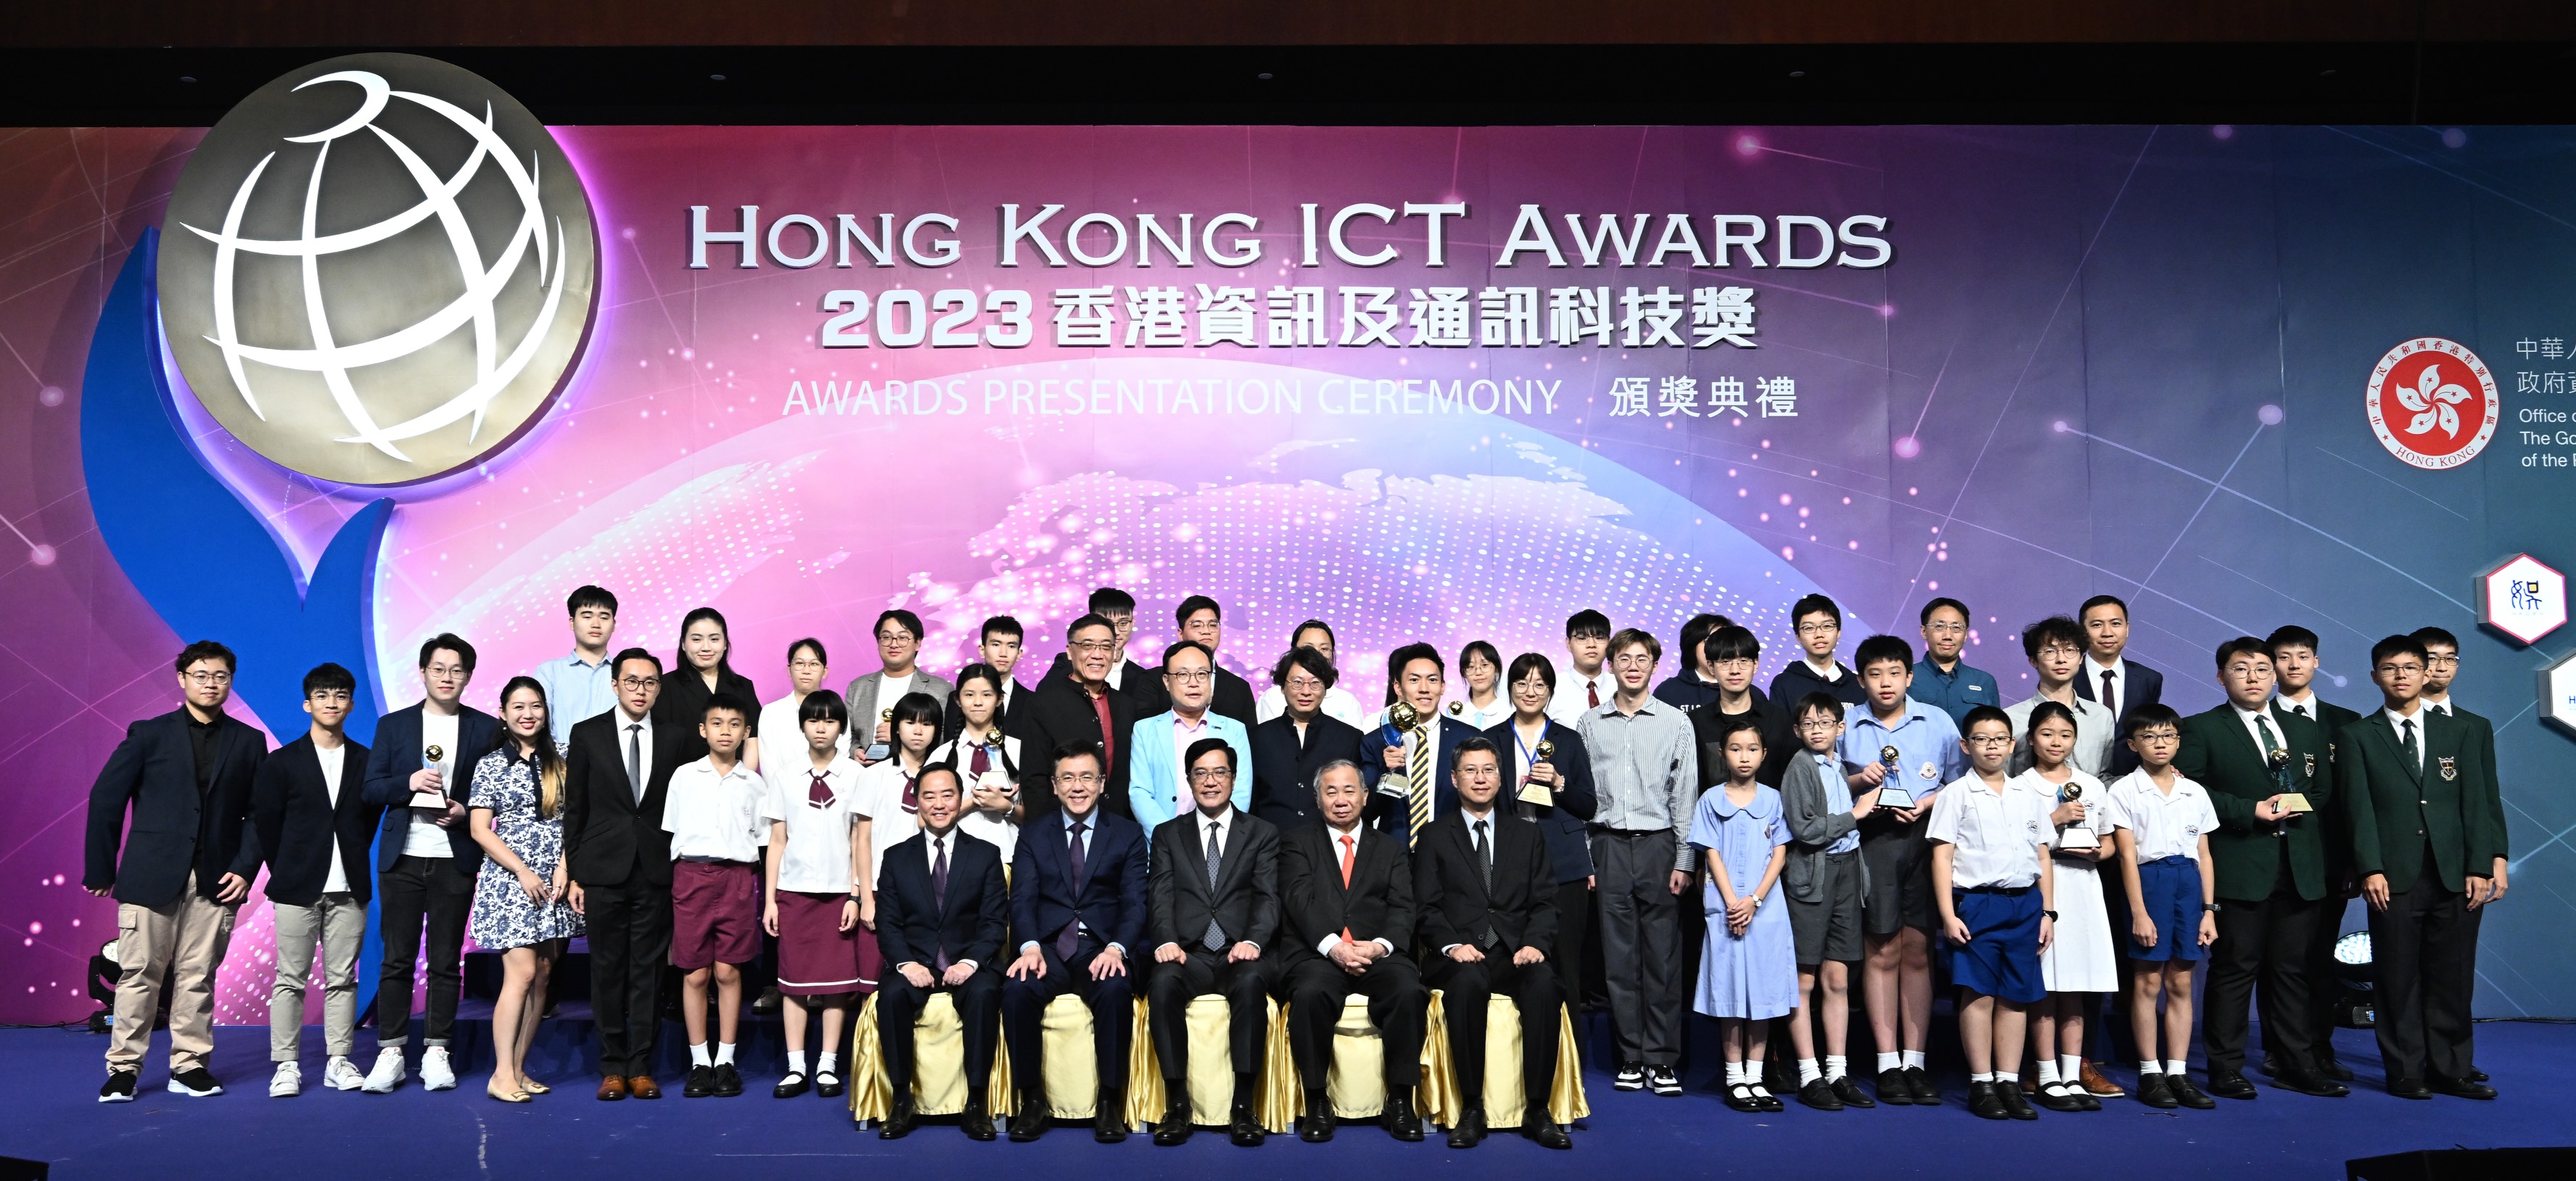 Hong Kong ICT Awards 2023 Student Innovation Award Winners Group Photo